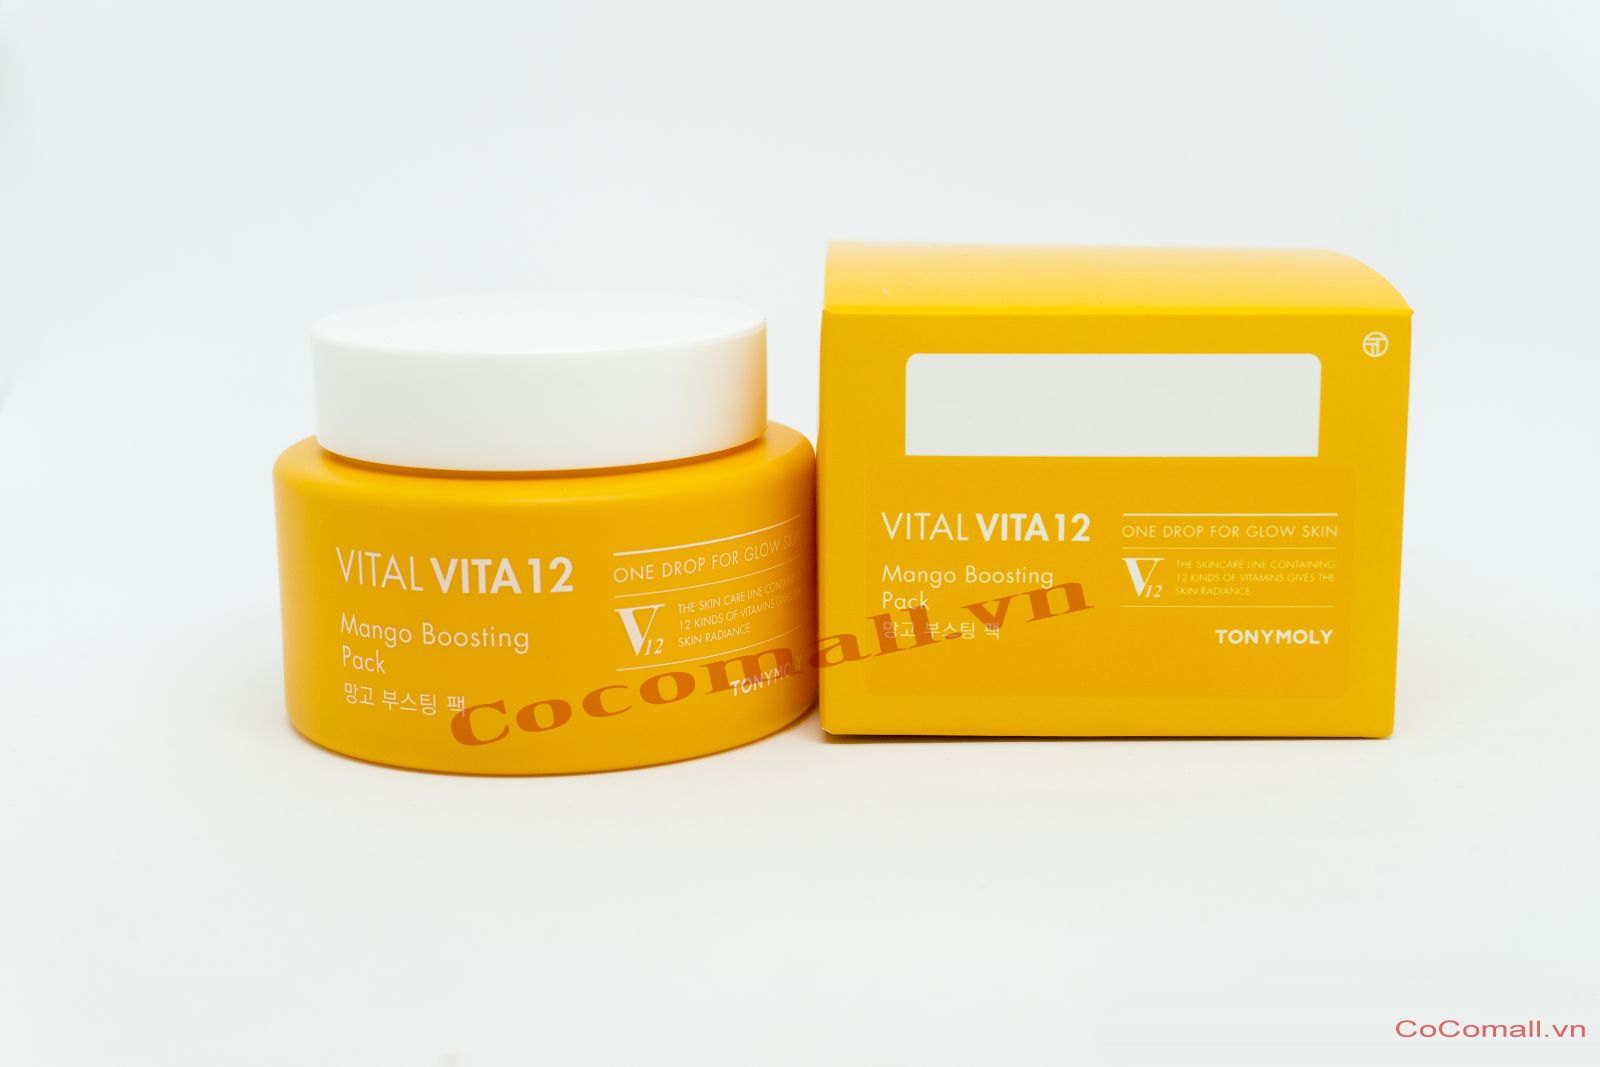 TONYMOLY Vital Vita 12 Mango Boosting Pack